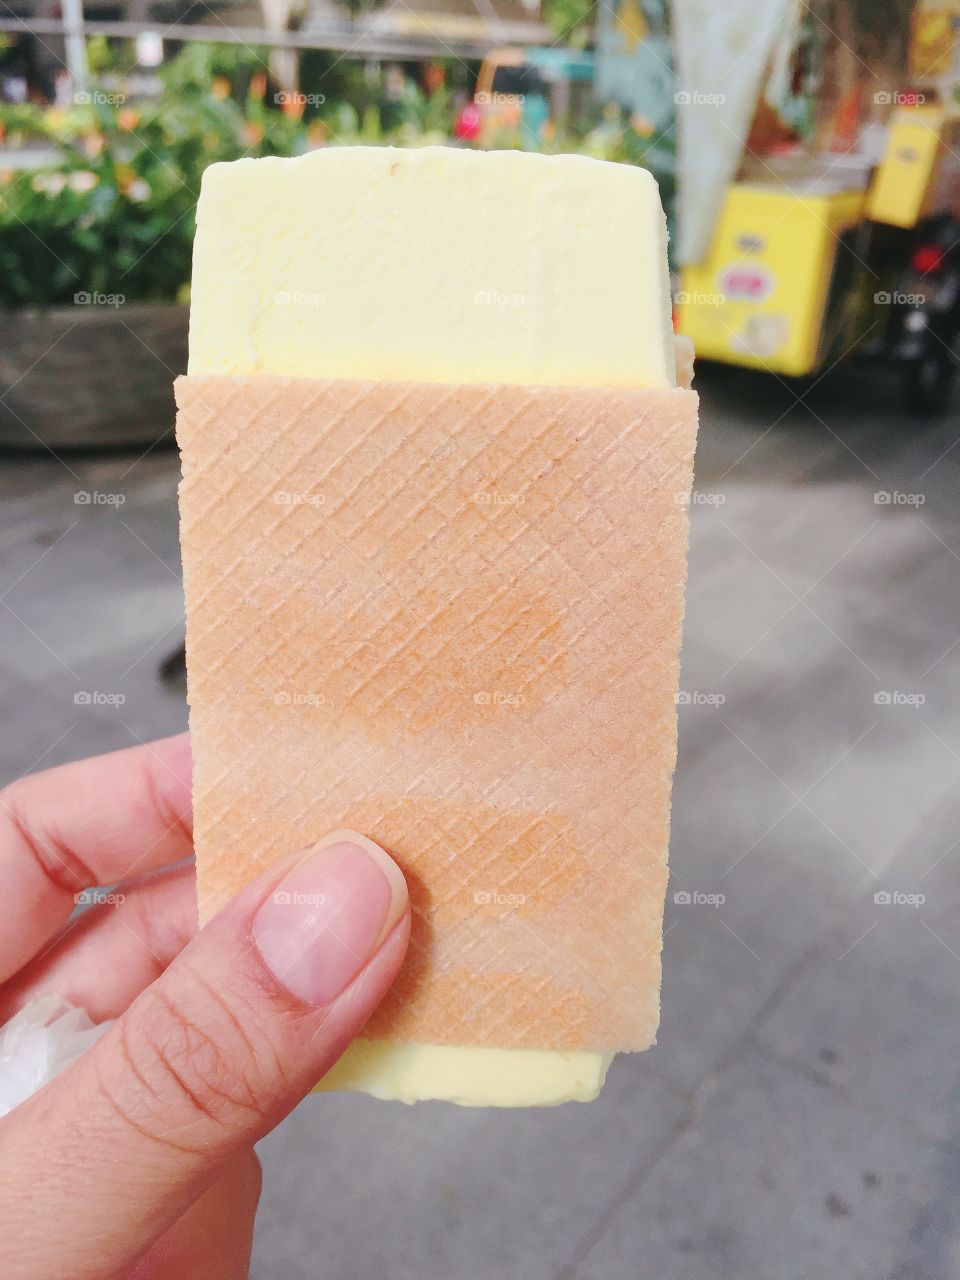 Durian ice cream sandwich